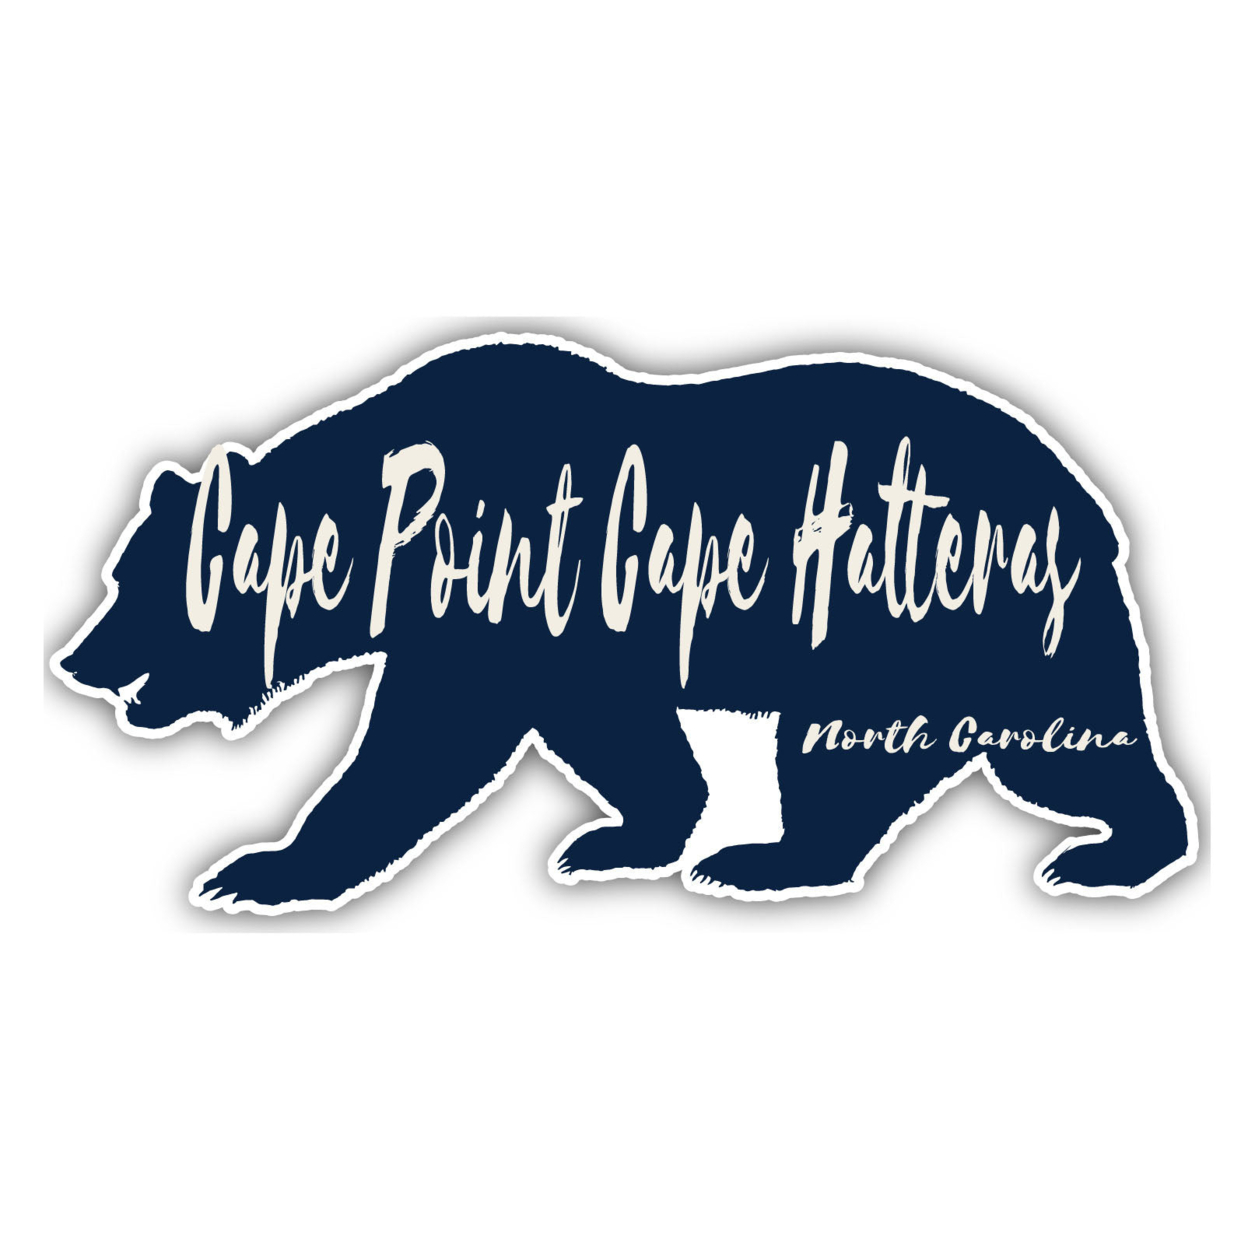 Cape Point Cape Hatteras North Carolina Souvenir Decorative Stickers (Choose Theme And Size) - Single Unit, 10-Inch, Bear